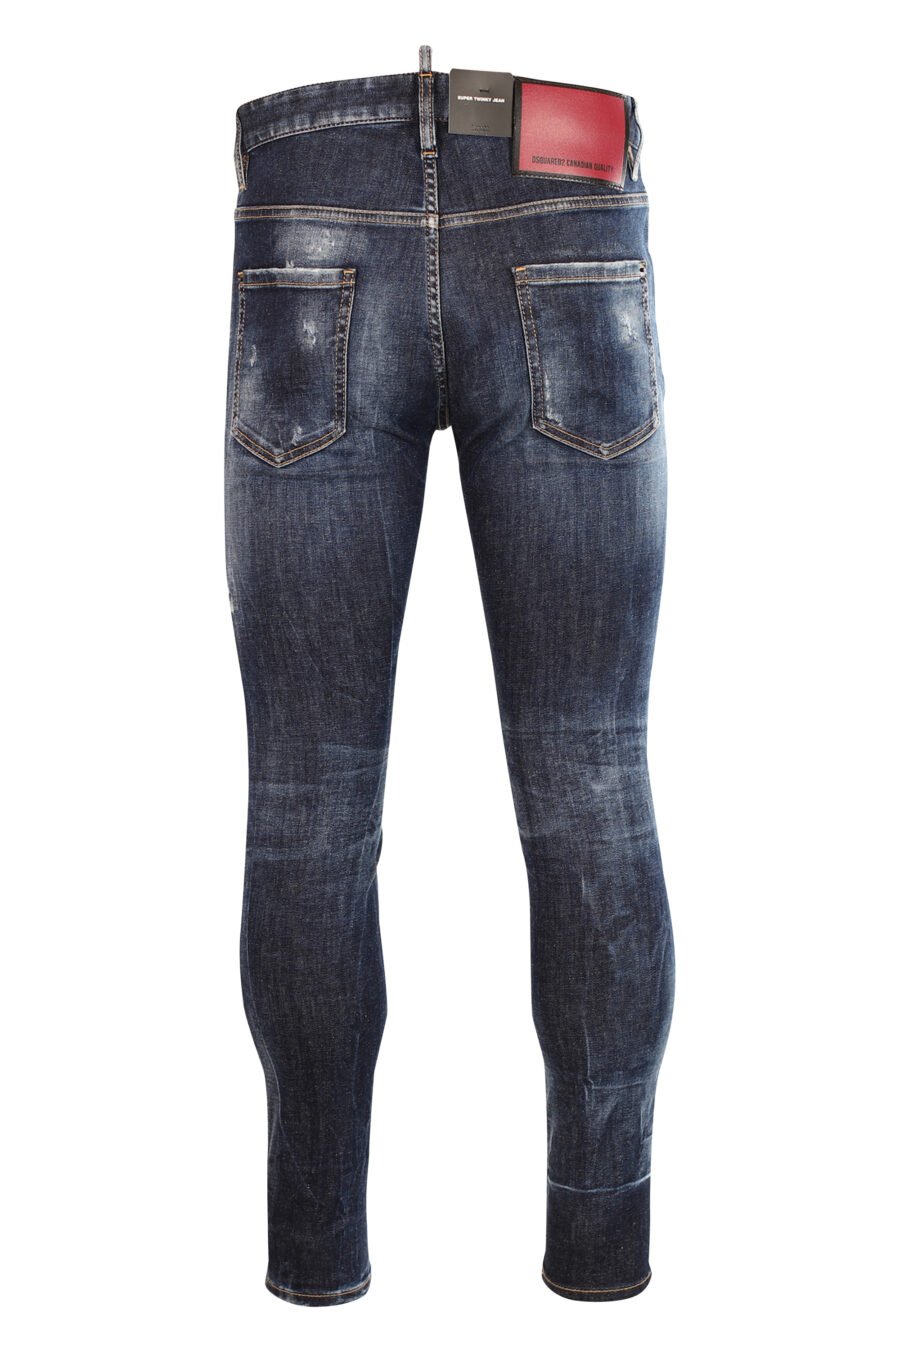 Jeans "super twinkey jean" blau mit Rissen - 8052134966914 3